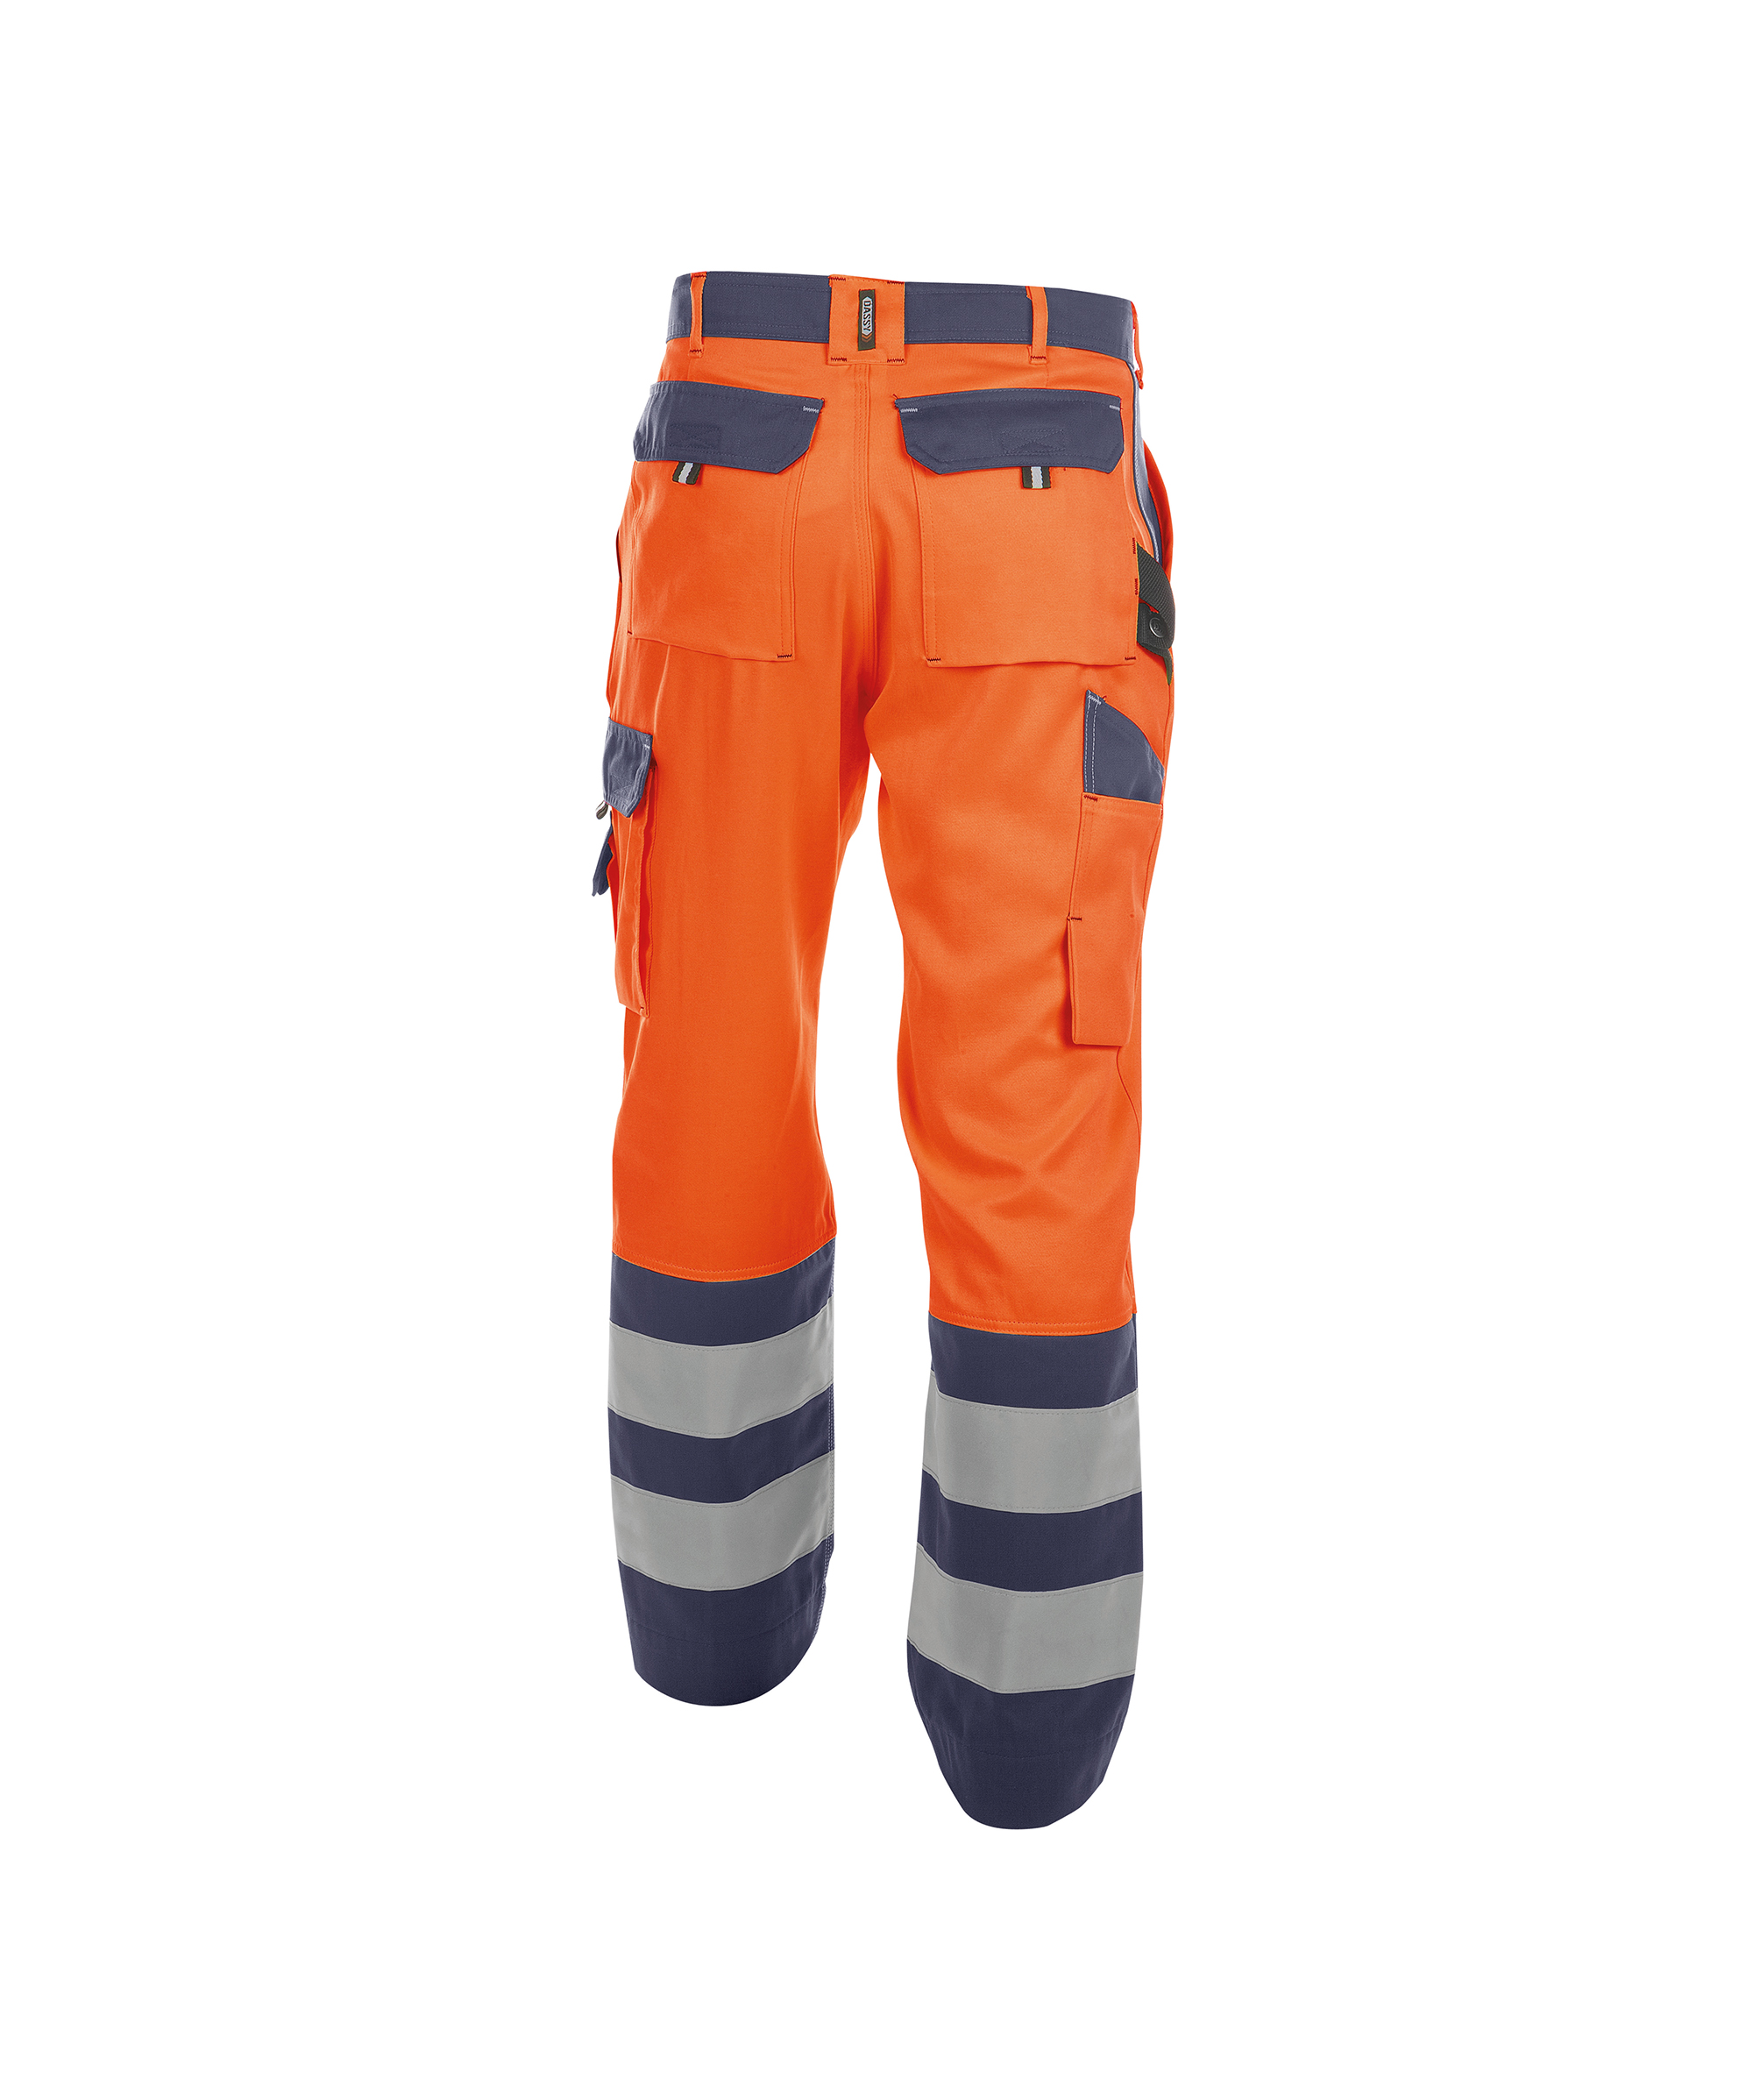 lancaster_high-visibility-work-trousers_fluo-orange-navy_back.jpg